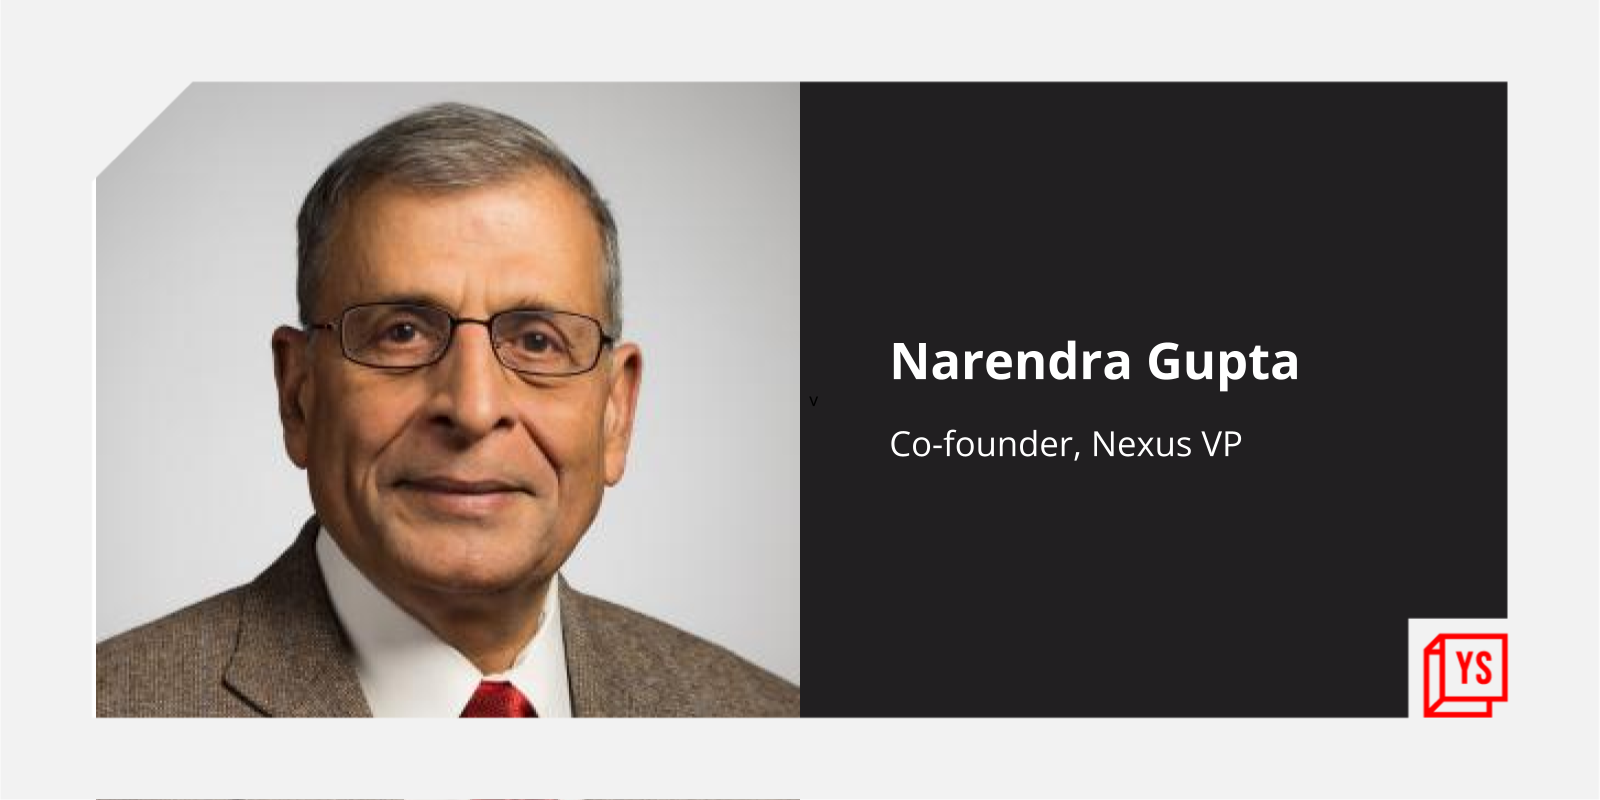 Narendra Gupta, Co-founder of Nexus Venture Partners, passes away